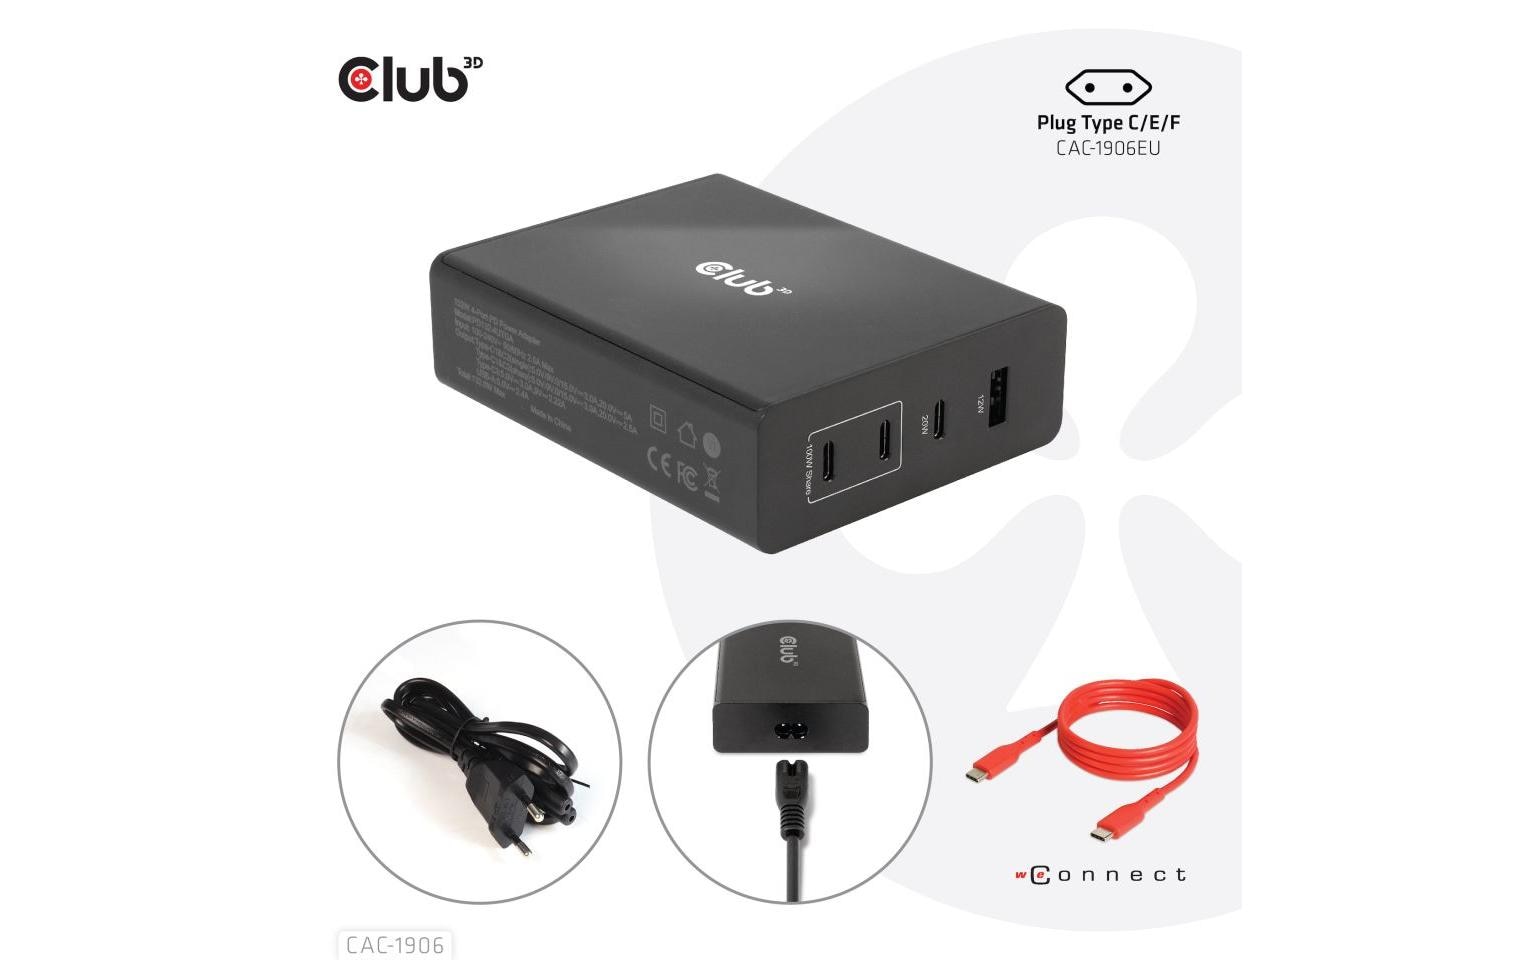 Club 3D USB-Wandladegerät CAC-1906